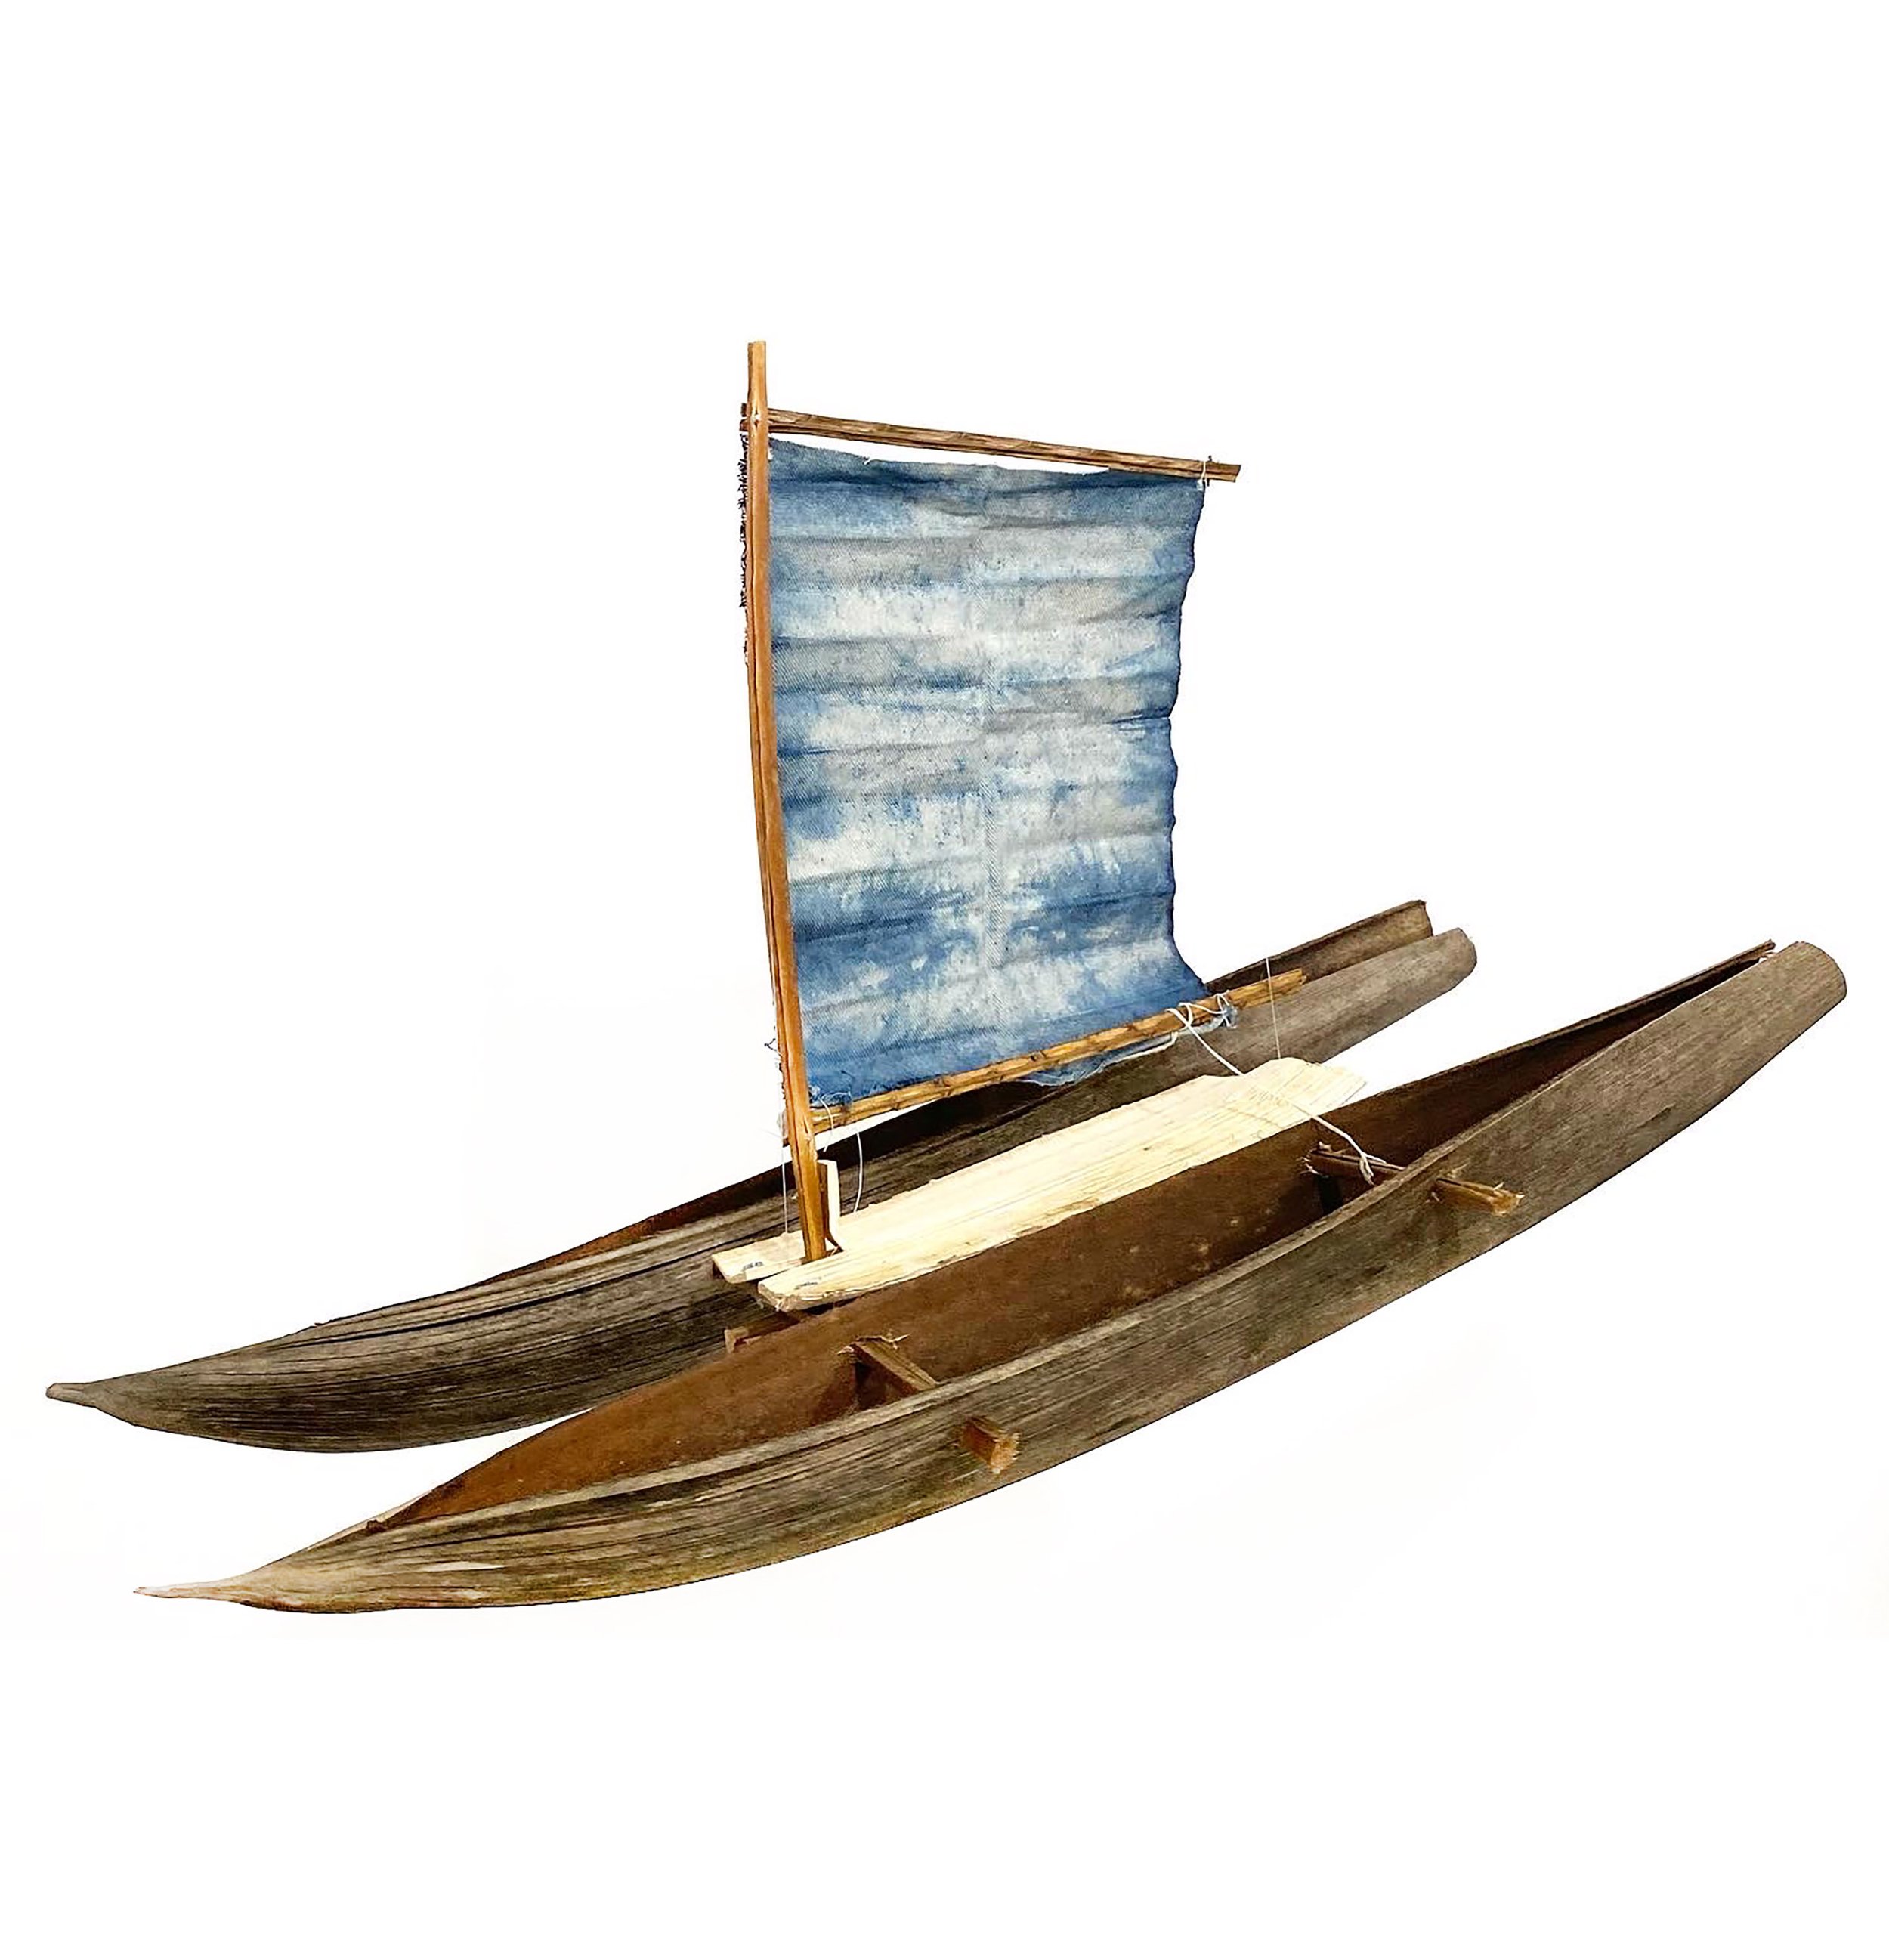    Catamaran    natural materials, indigo-dyed canvas and hardware  18” x 30” x 16”  2022  (sold) 